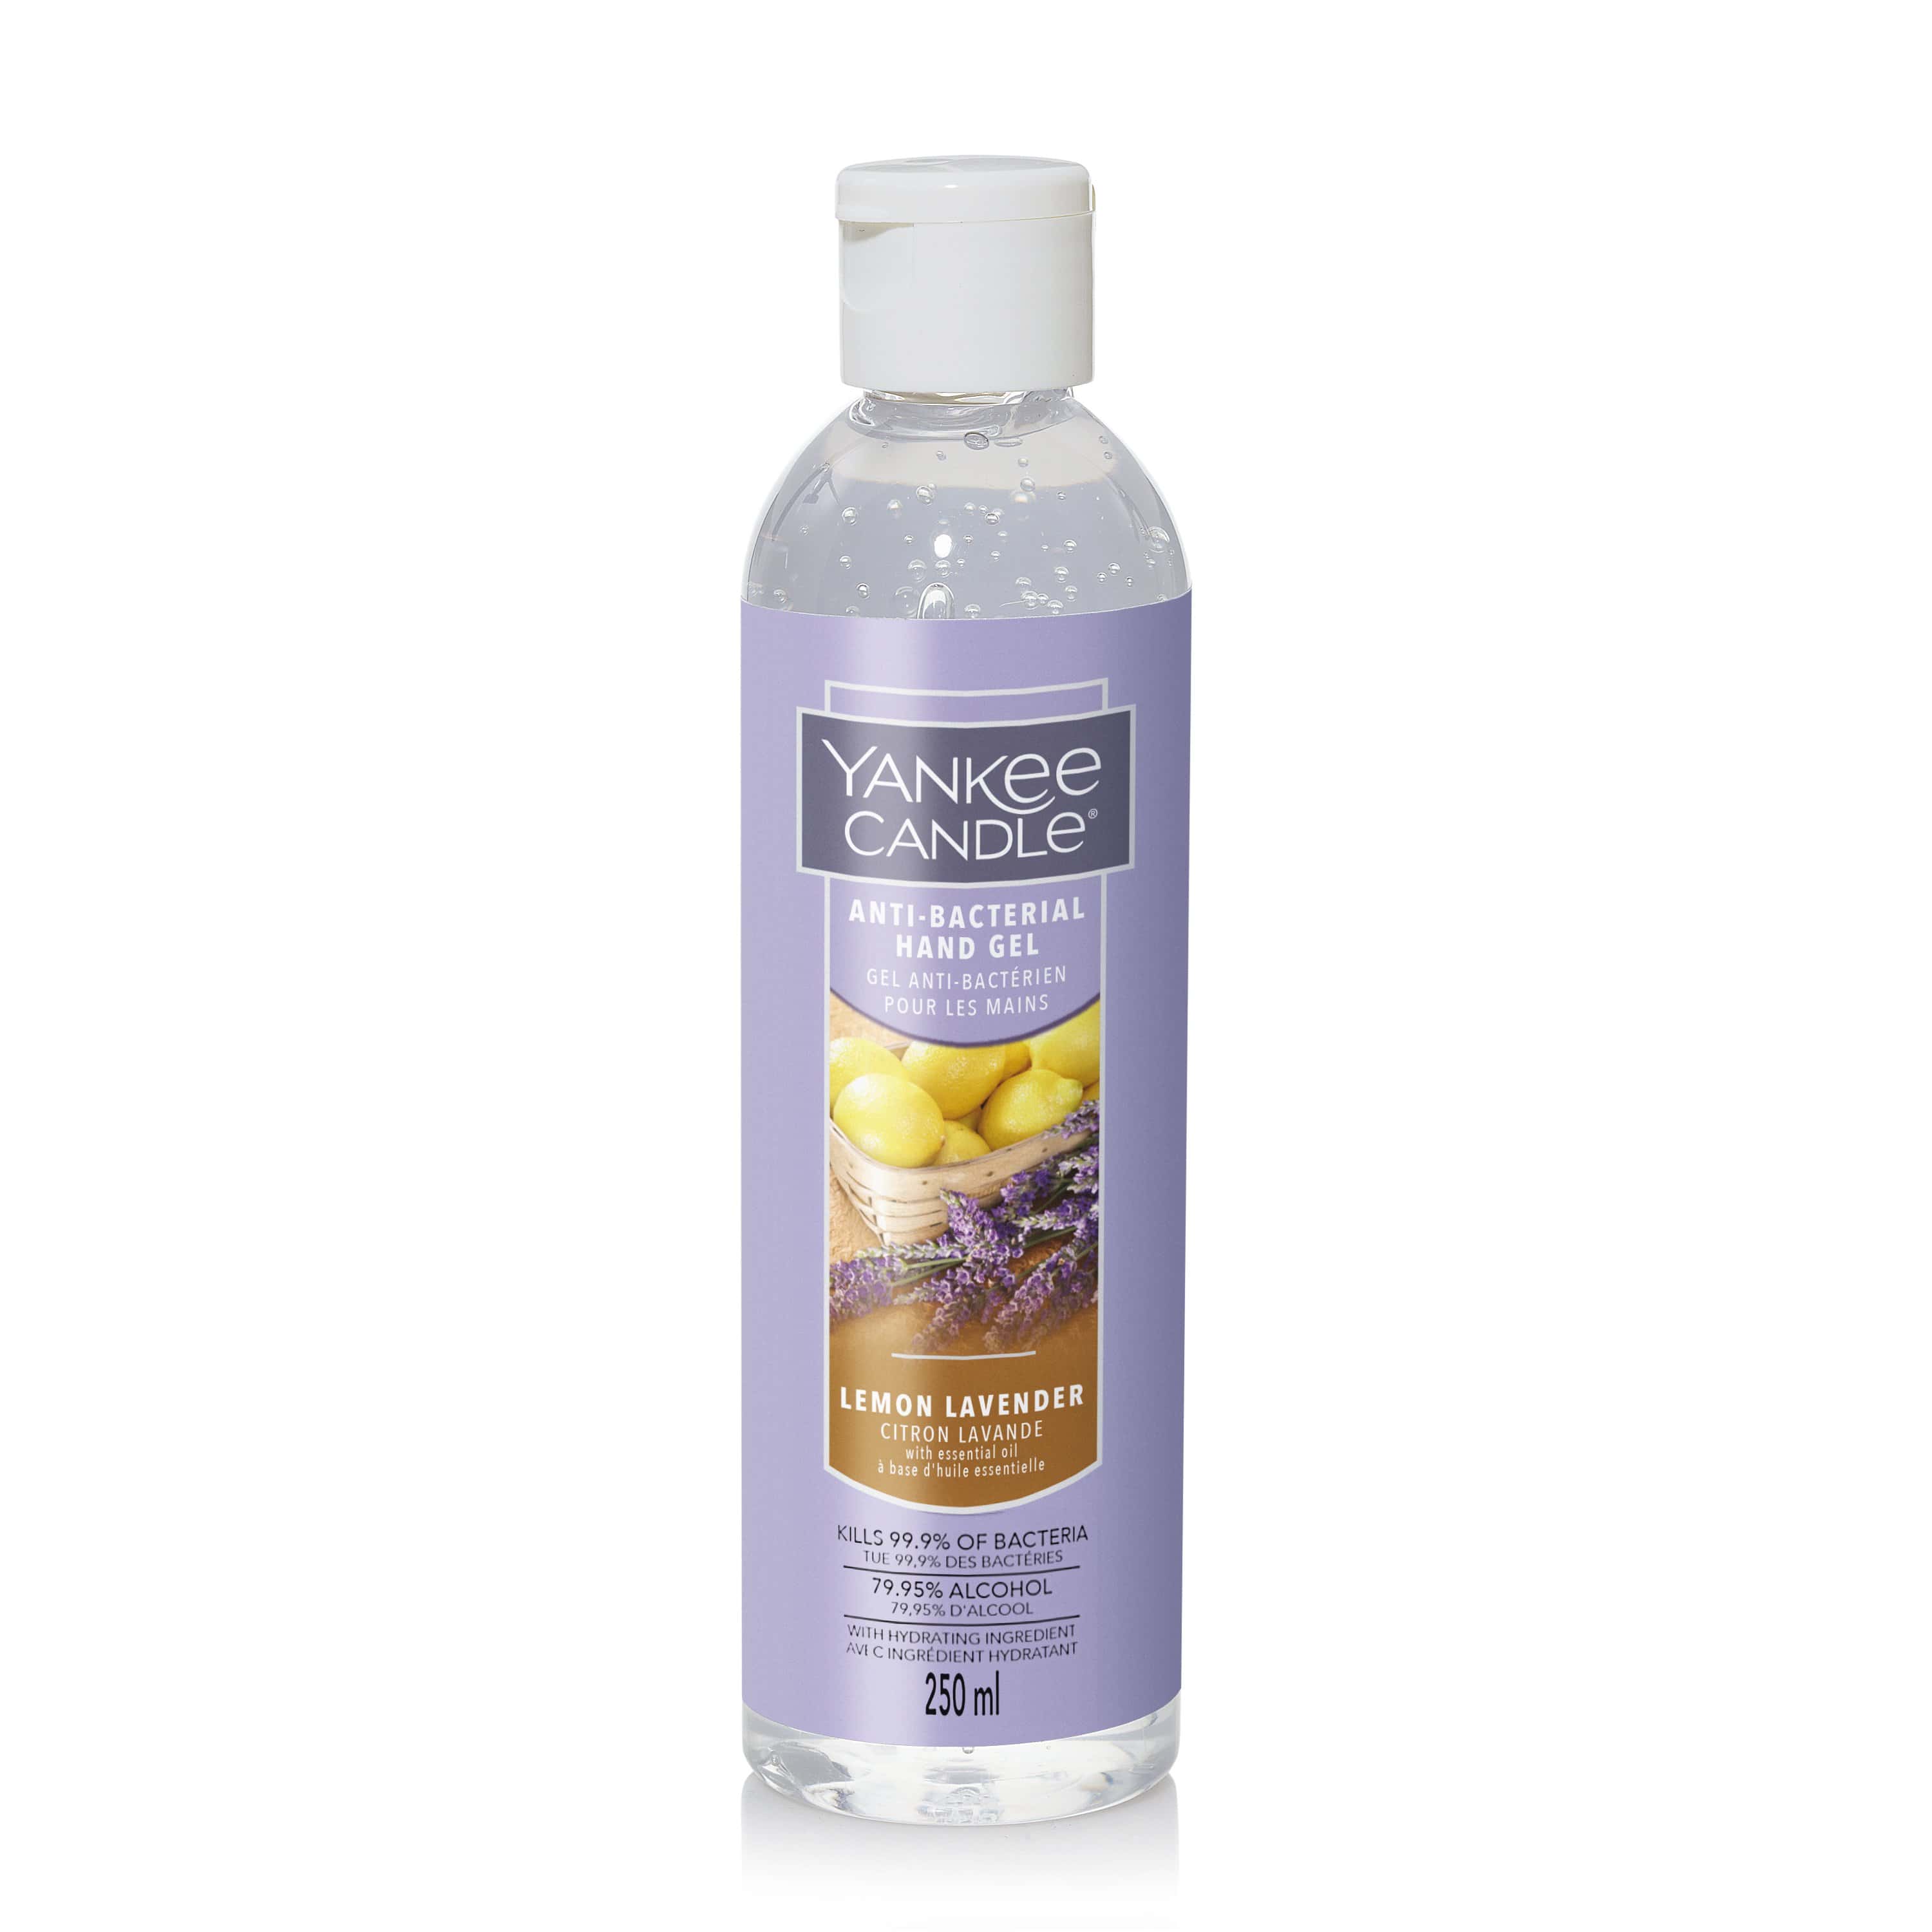 Yankee Candle Hand Sanitiser 250 ml Yankee Candle Anti-Bacterial Hand Gel Sanitiser - Lemon Lavender